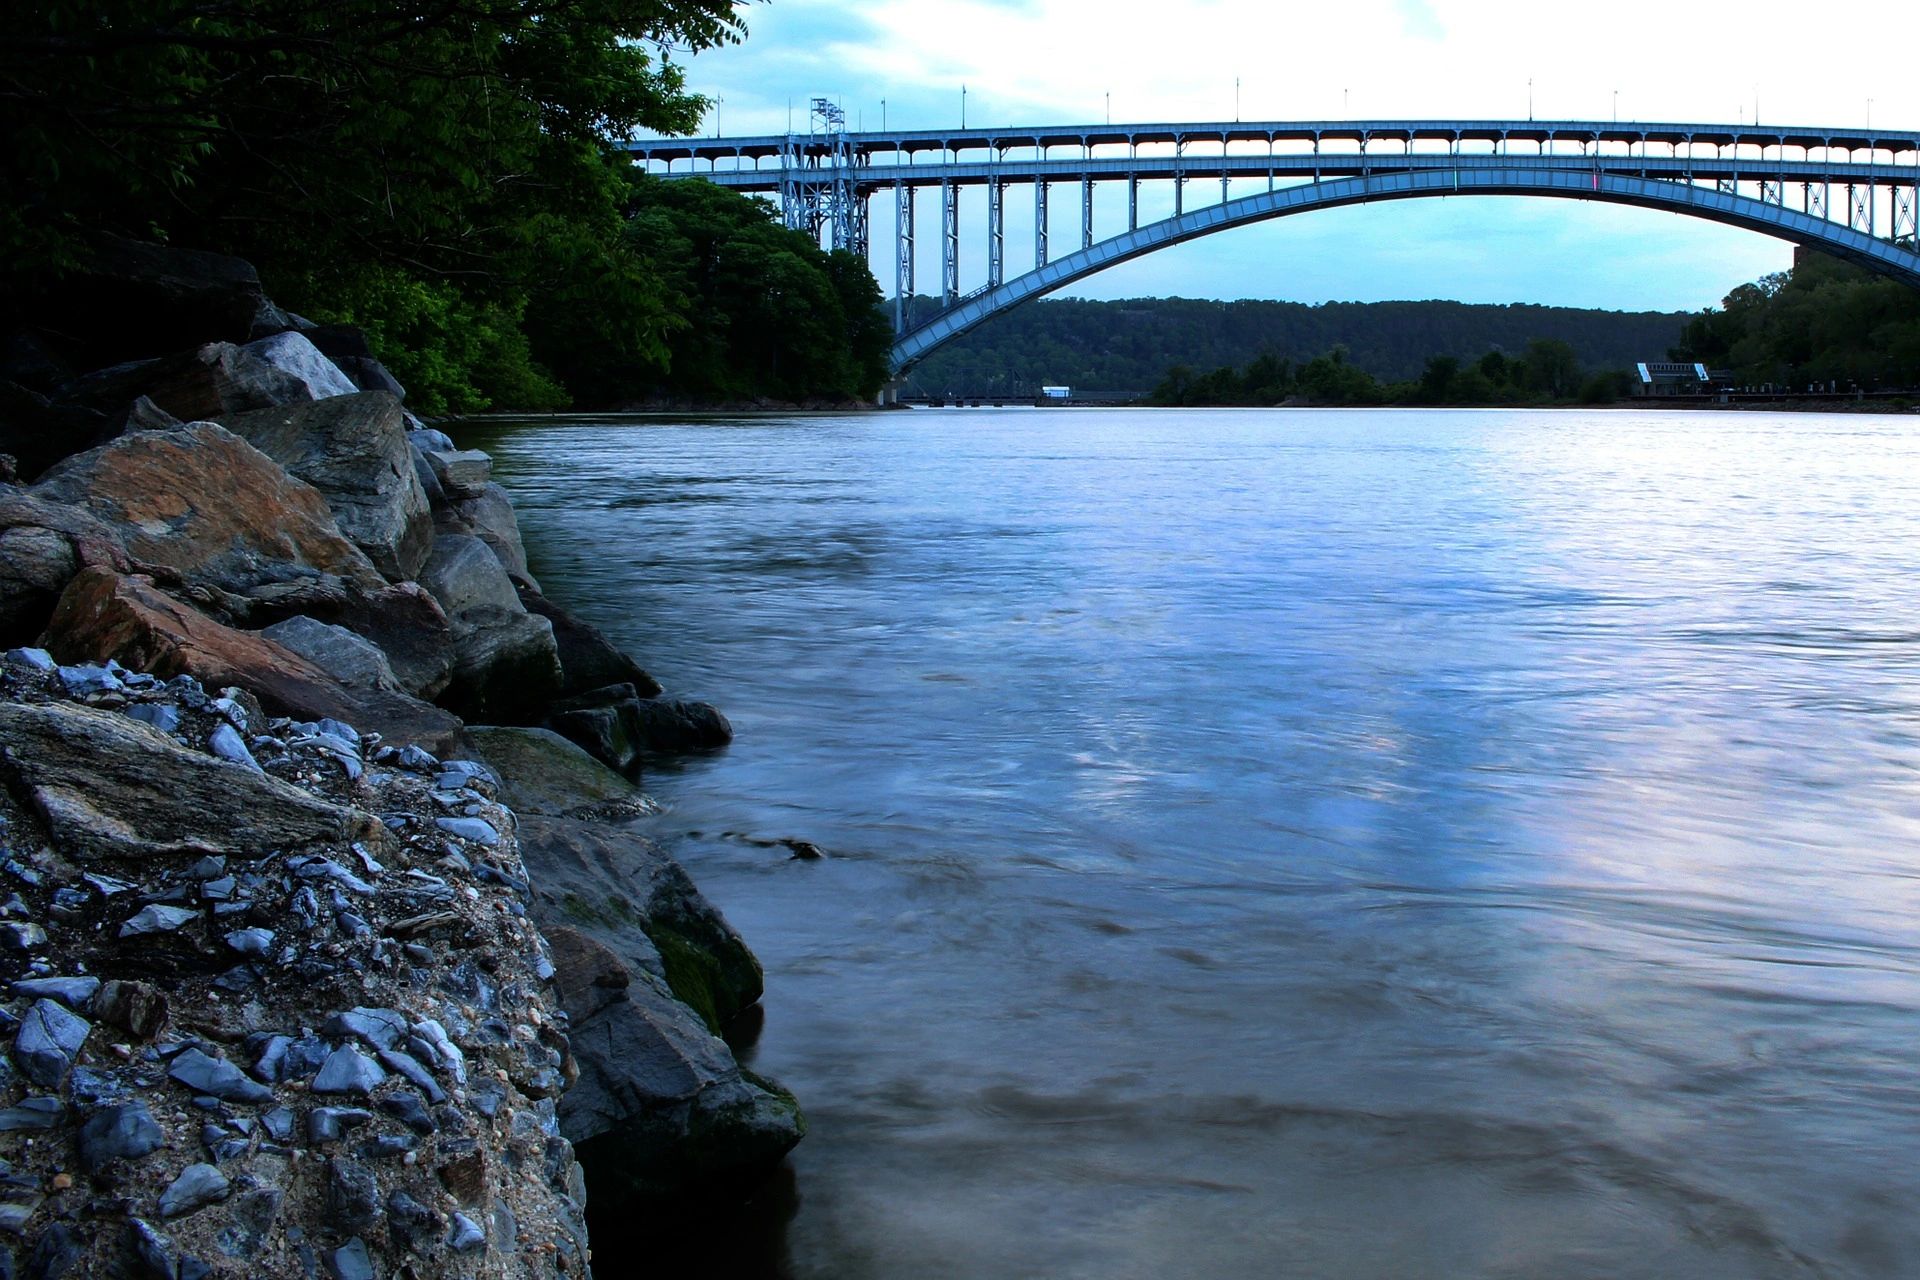 Henry Hudson Bridge over Hudson River with rocky shore in front left of image